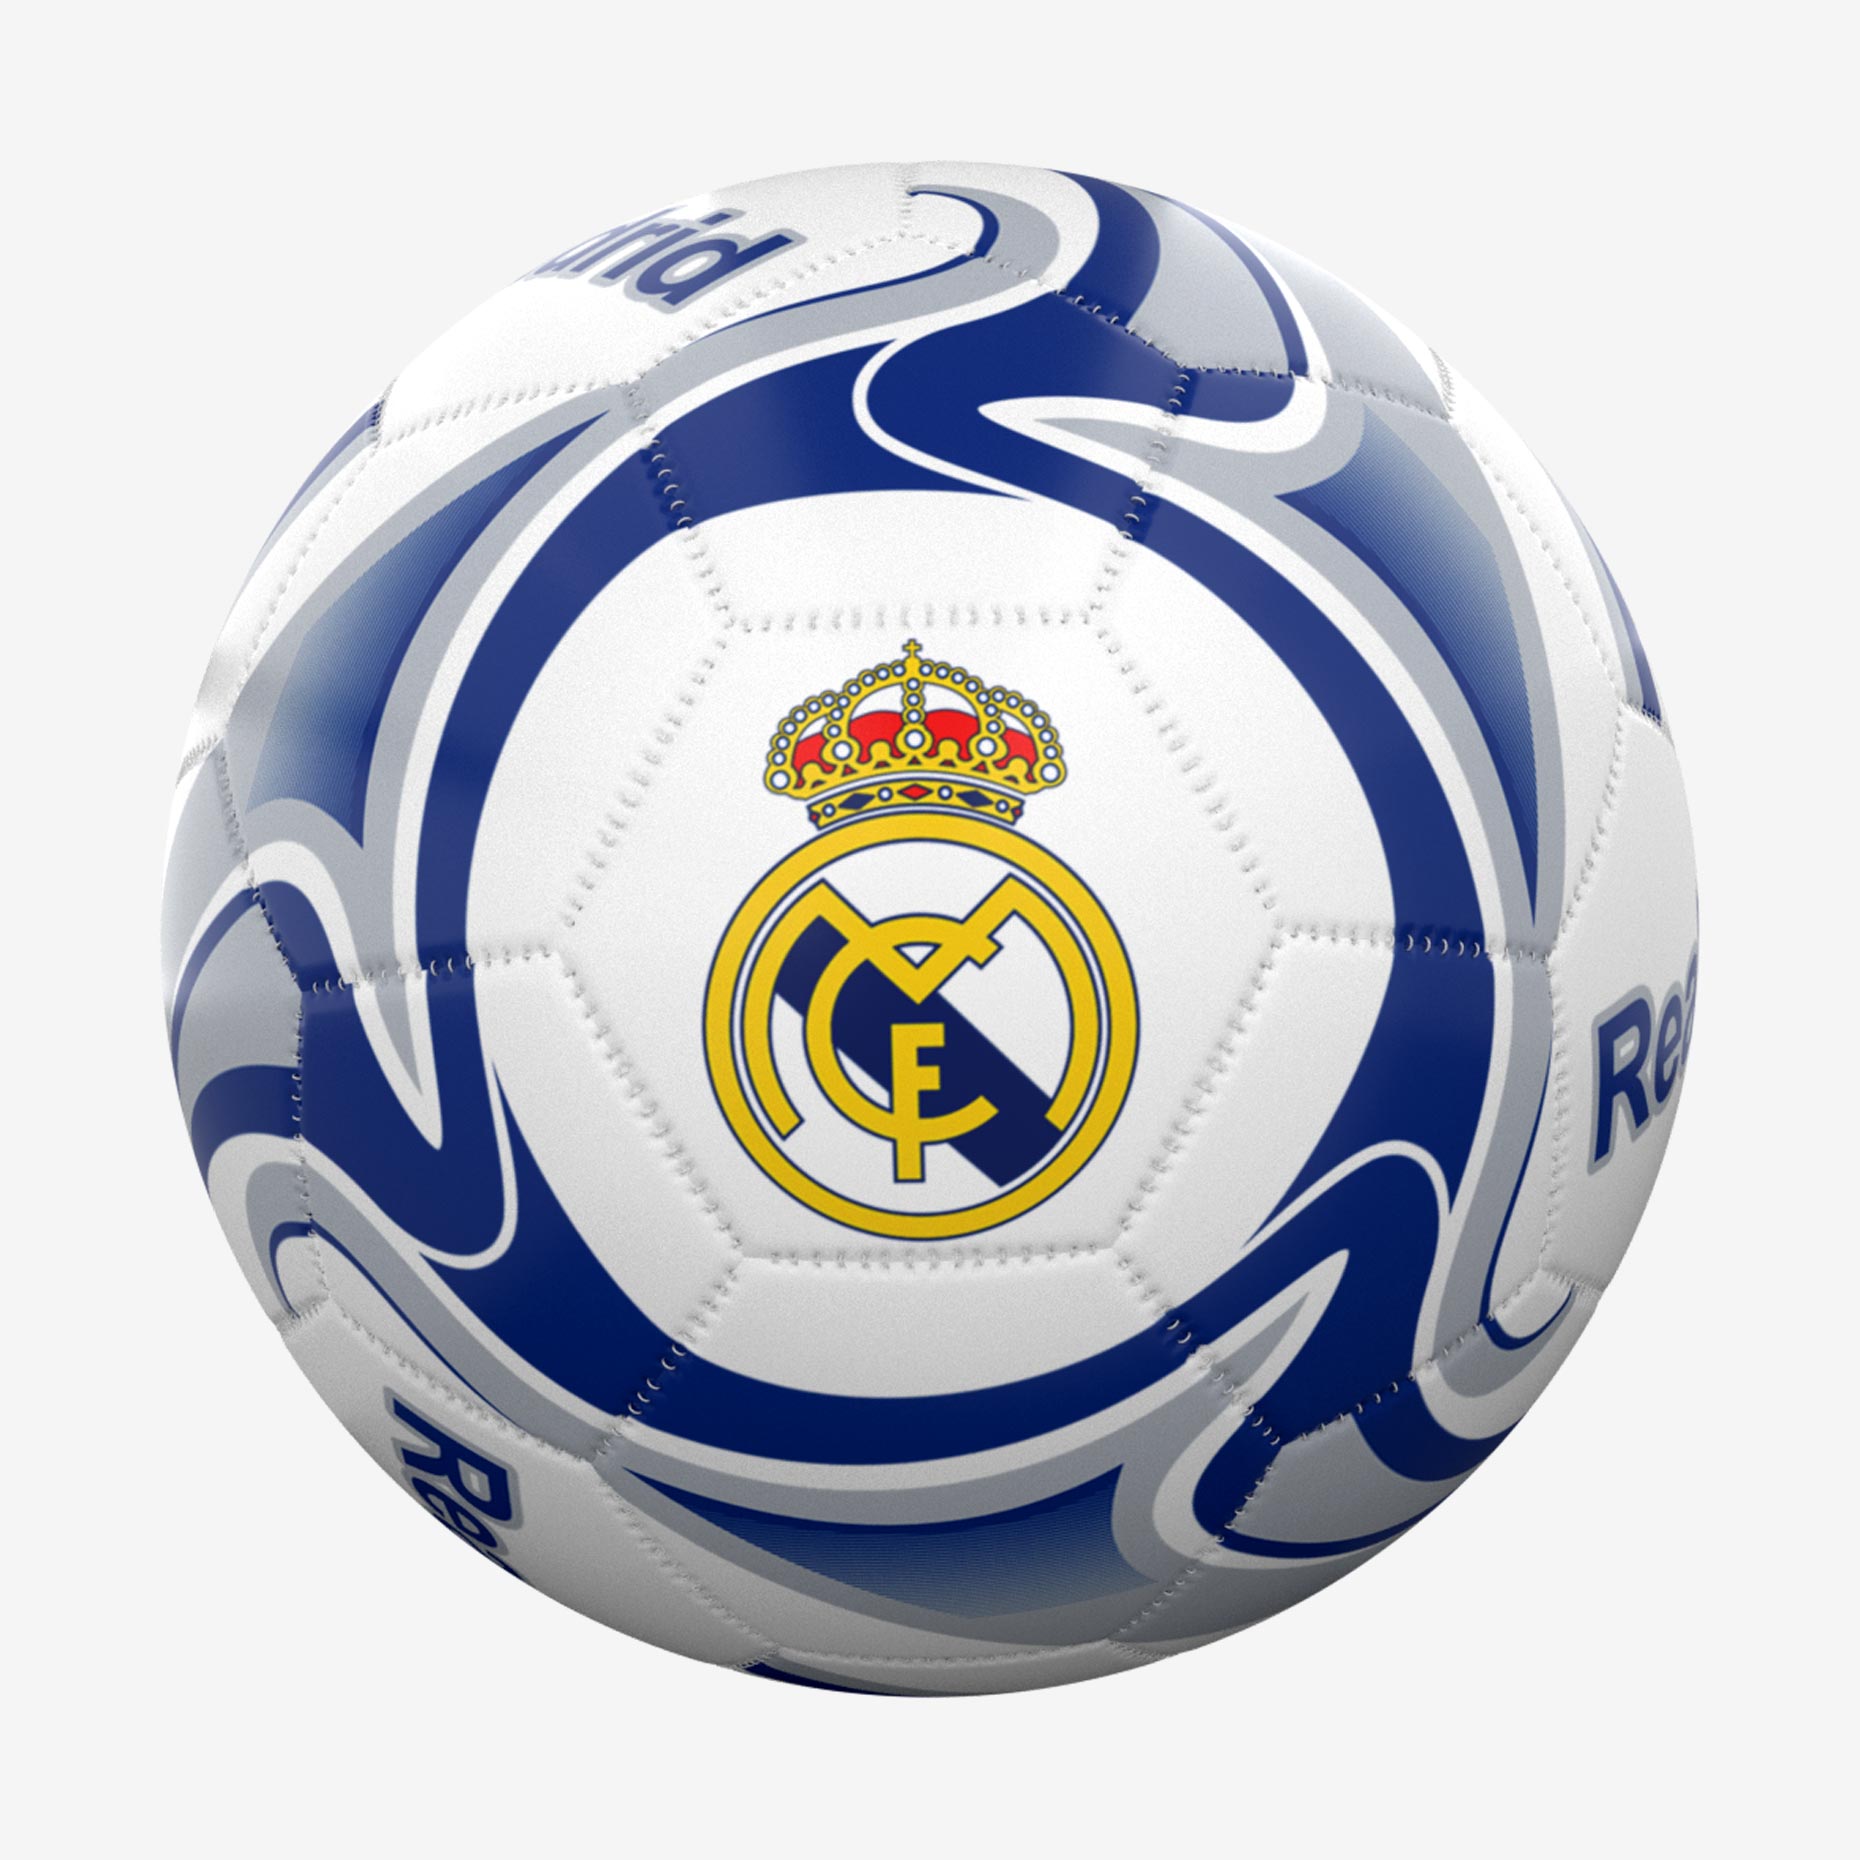 توپ فوتبال دوخت ماشینی سایز 2 رئال مادرید – New club2